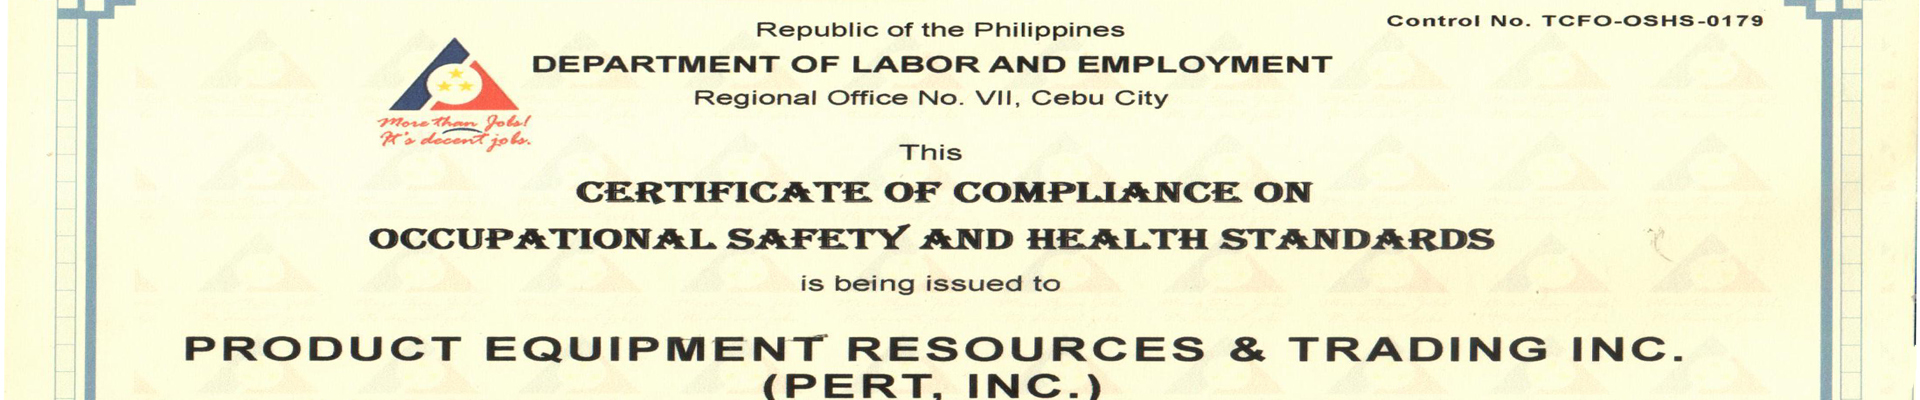 DOLE - Certificate of Compliance